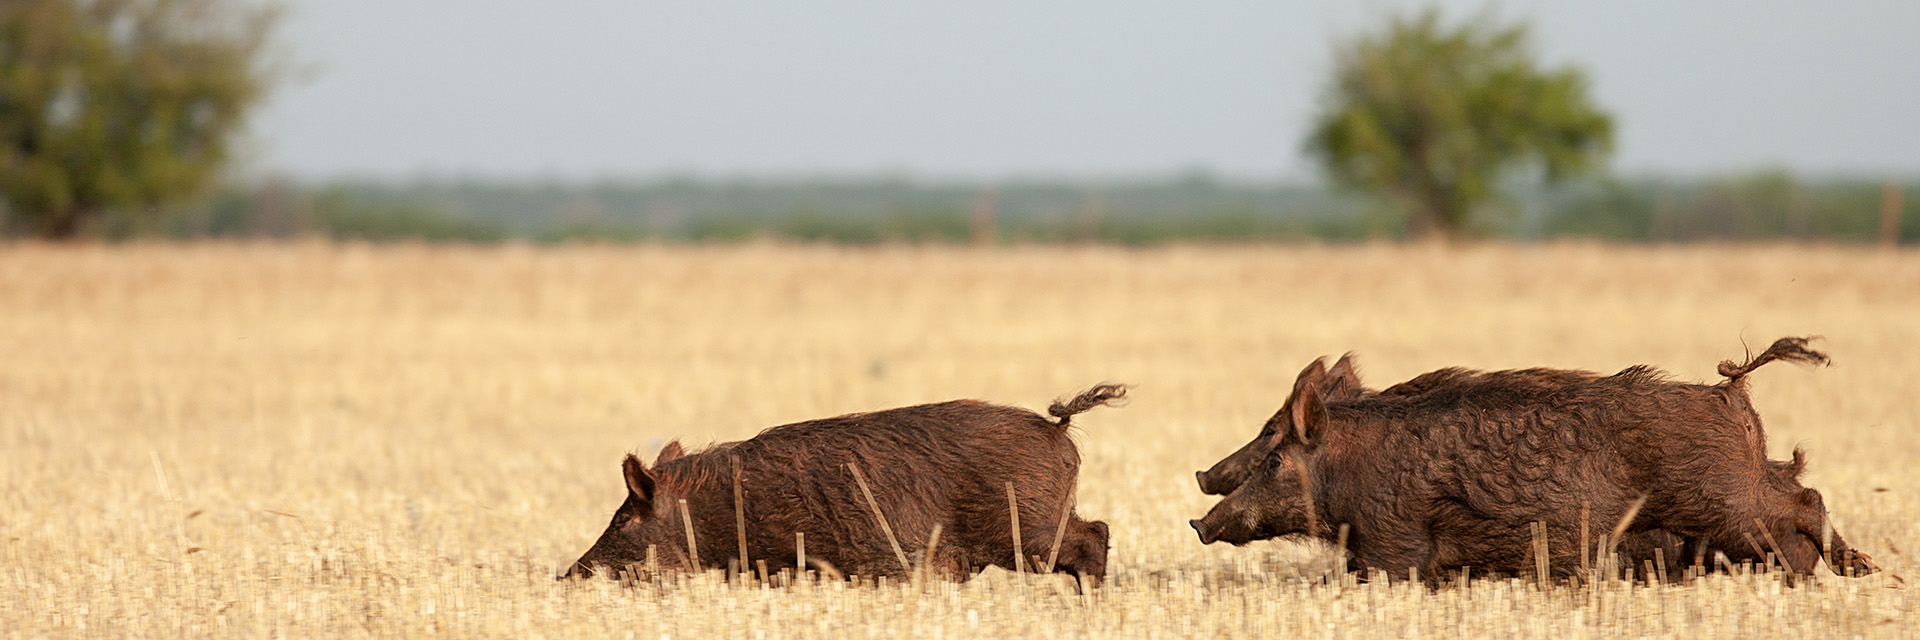 Feral Hogs running in a field